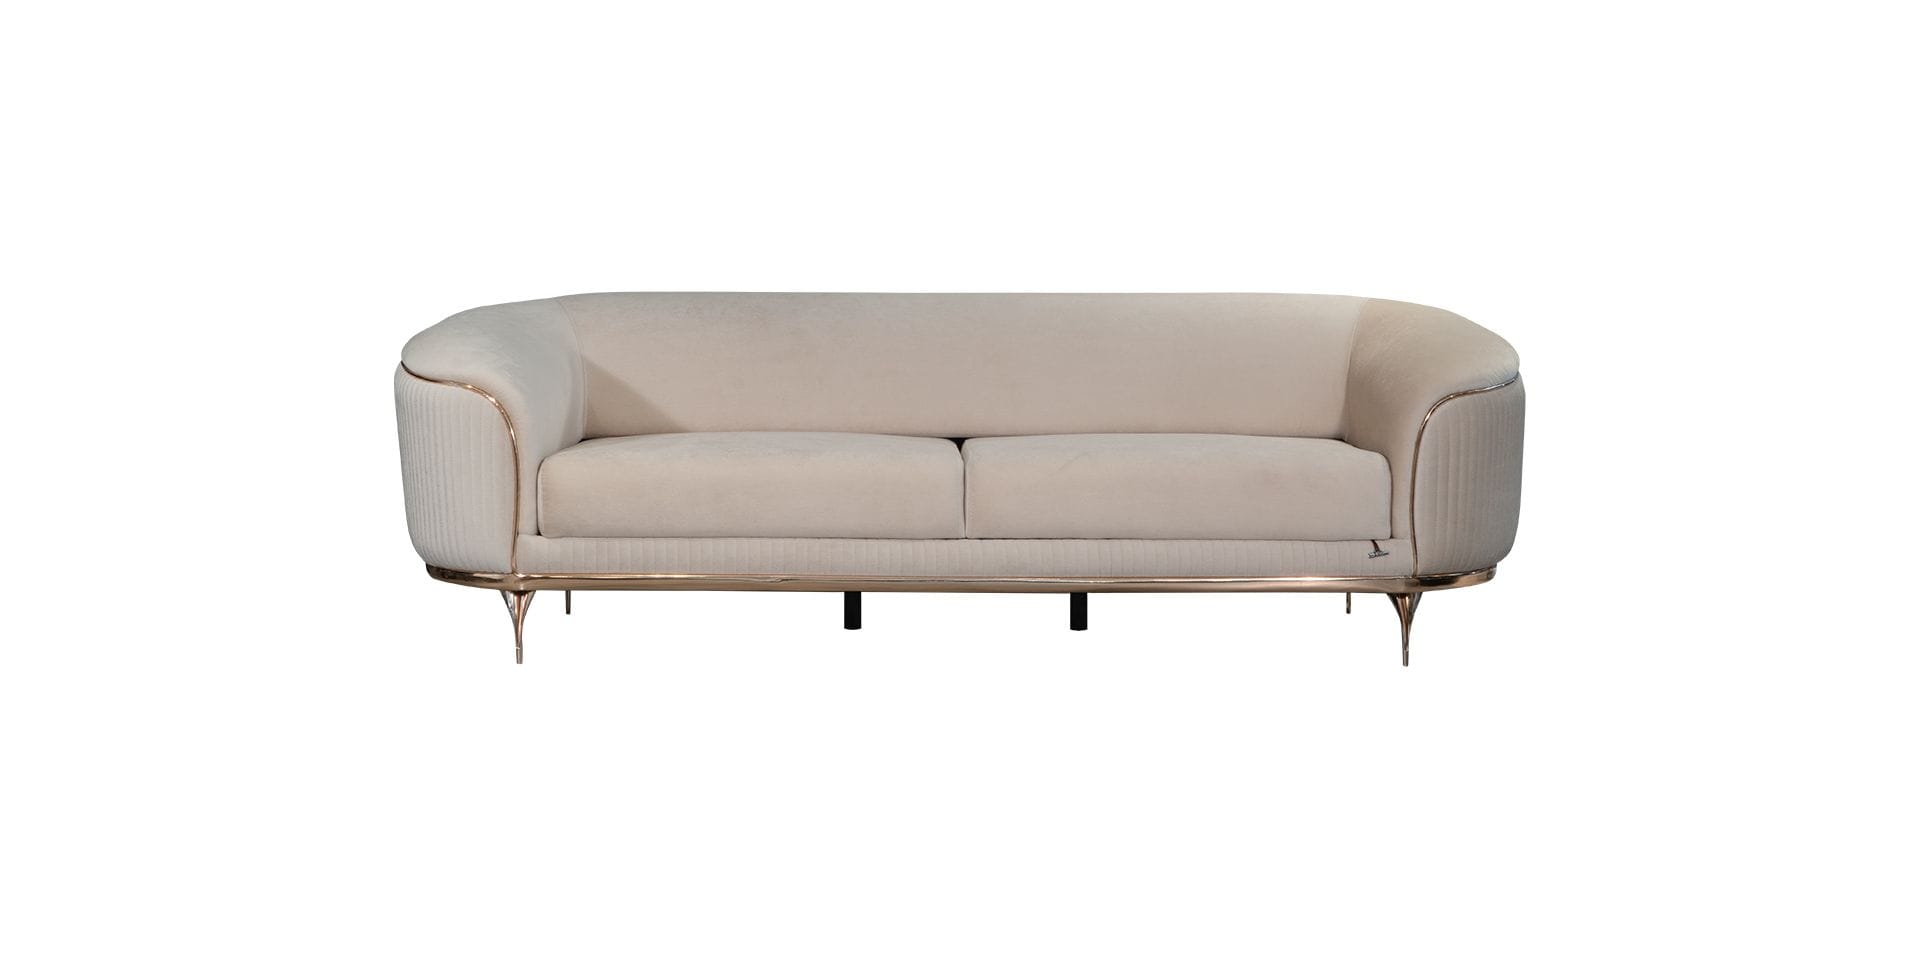 Pandora 3 Seat Sofa, Cream by Furnia Furniture